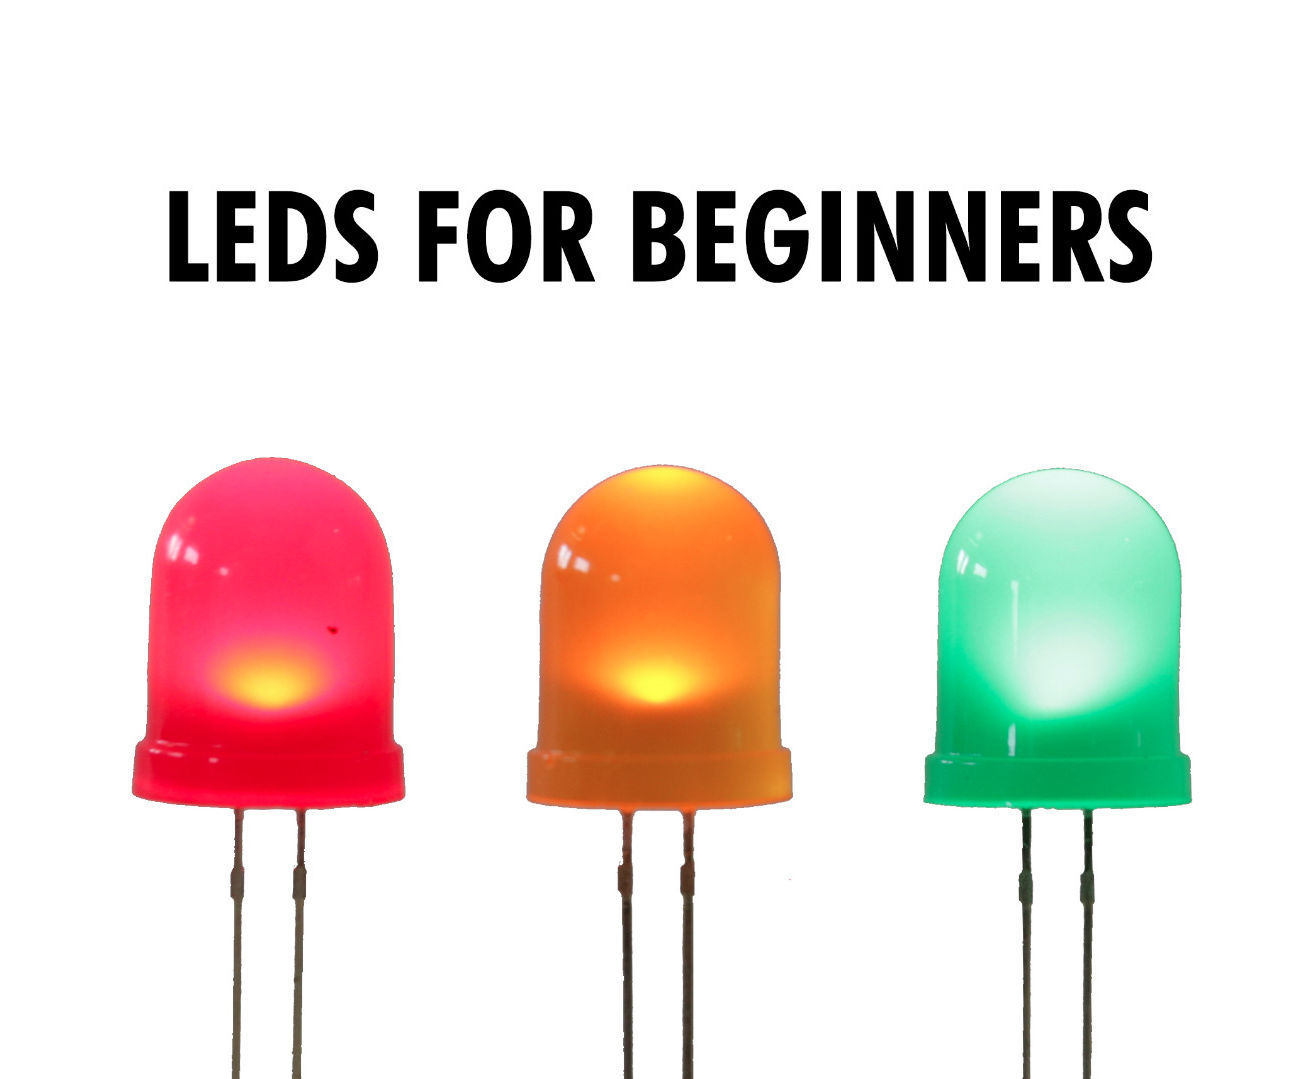 LEDs for Beginners